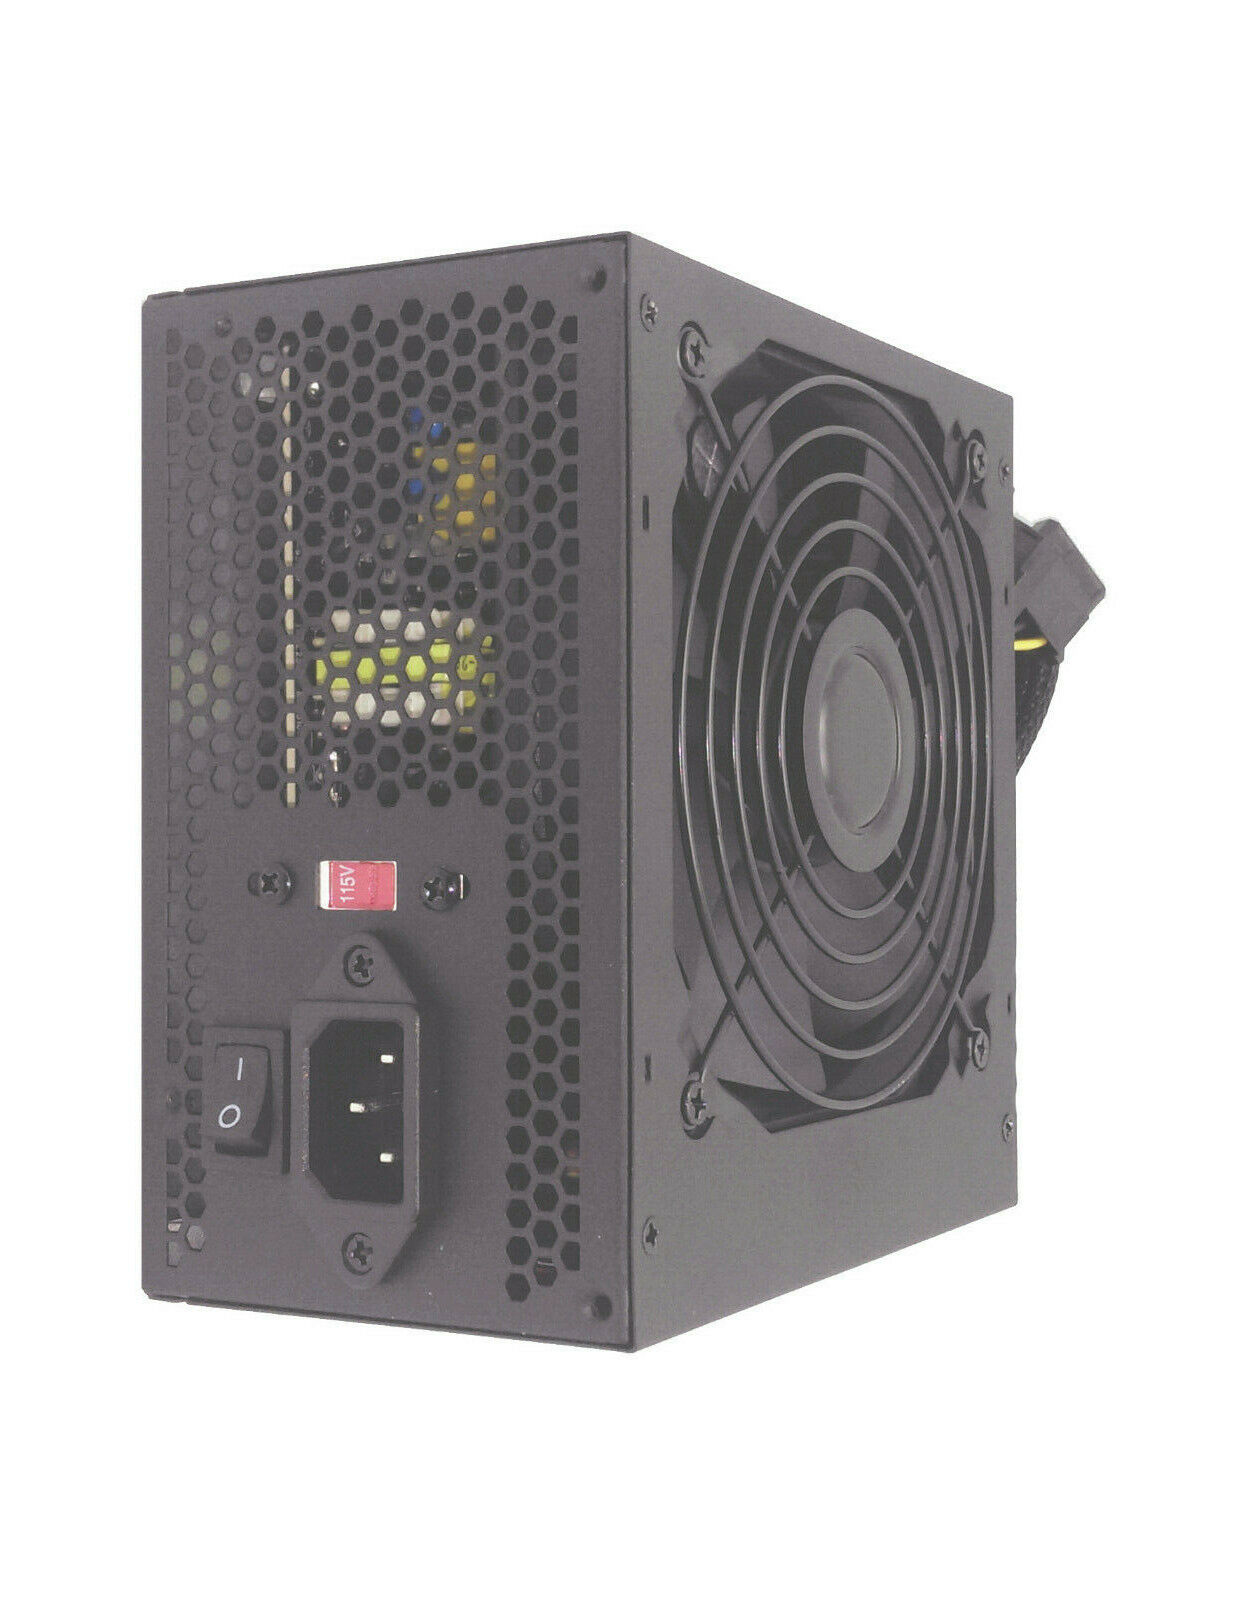 New 680W Black Gaming PC 120mm Fan ATX 12V Power Supply 6/8-pin PCIe PSU